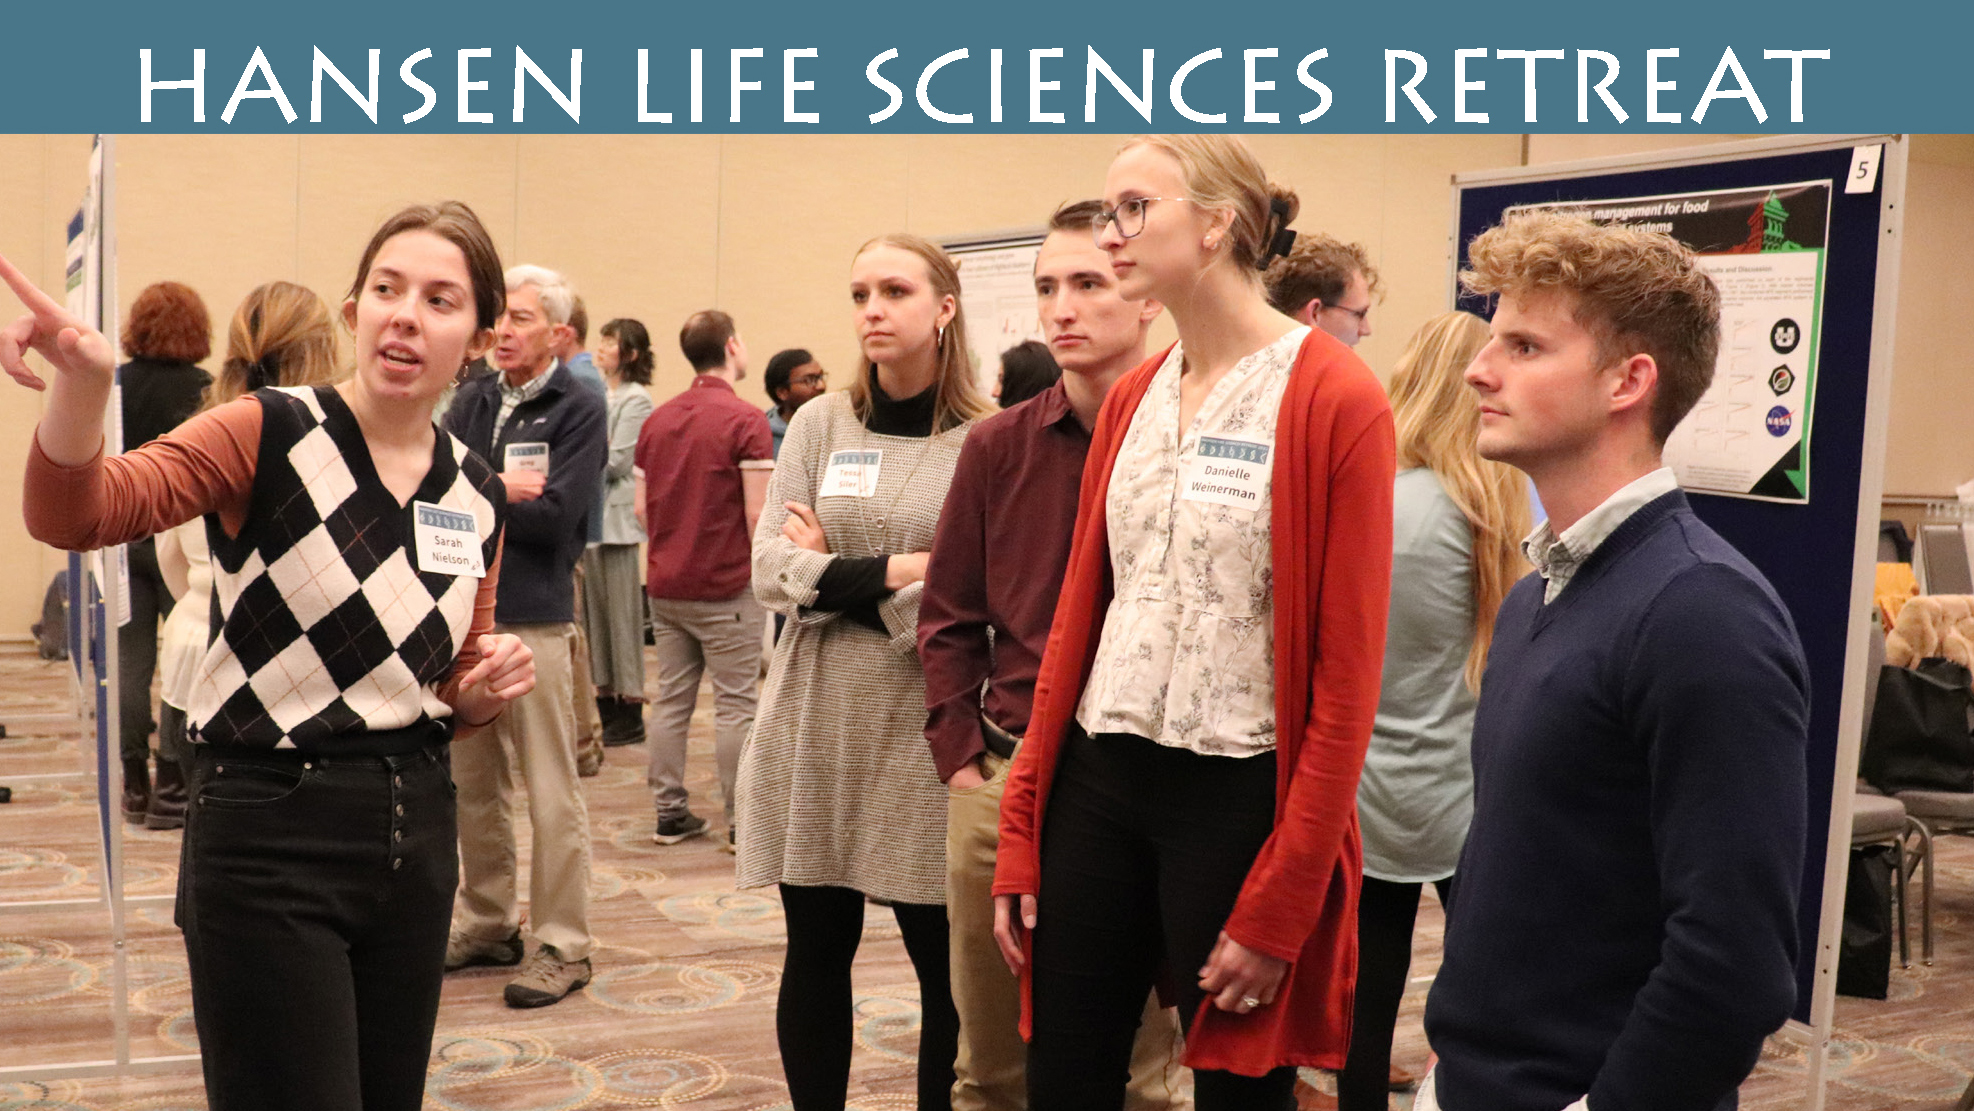 Registration Open for USU's 13th Annual Hansen Life Sciences Retreat Oct. 27-28